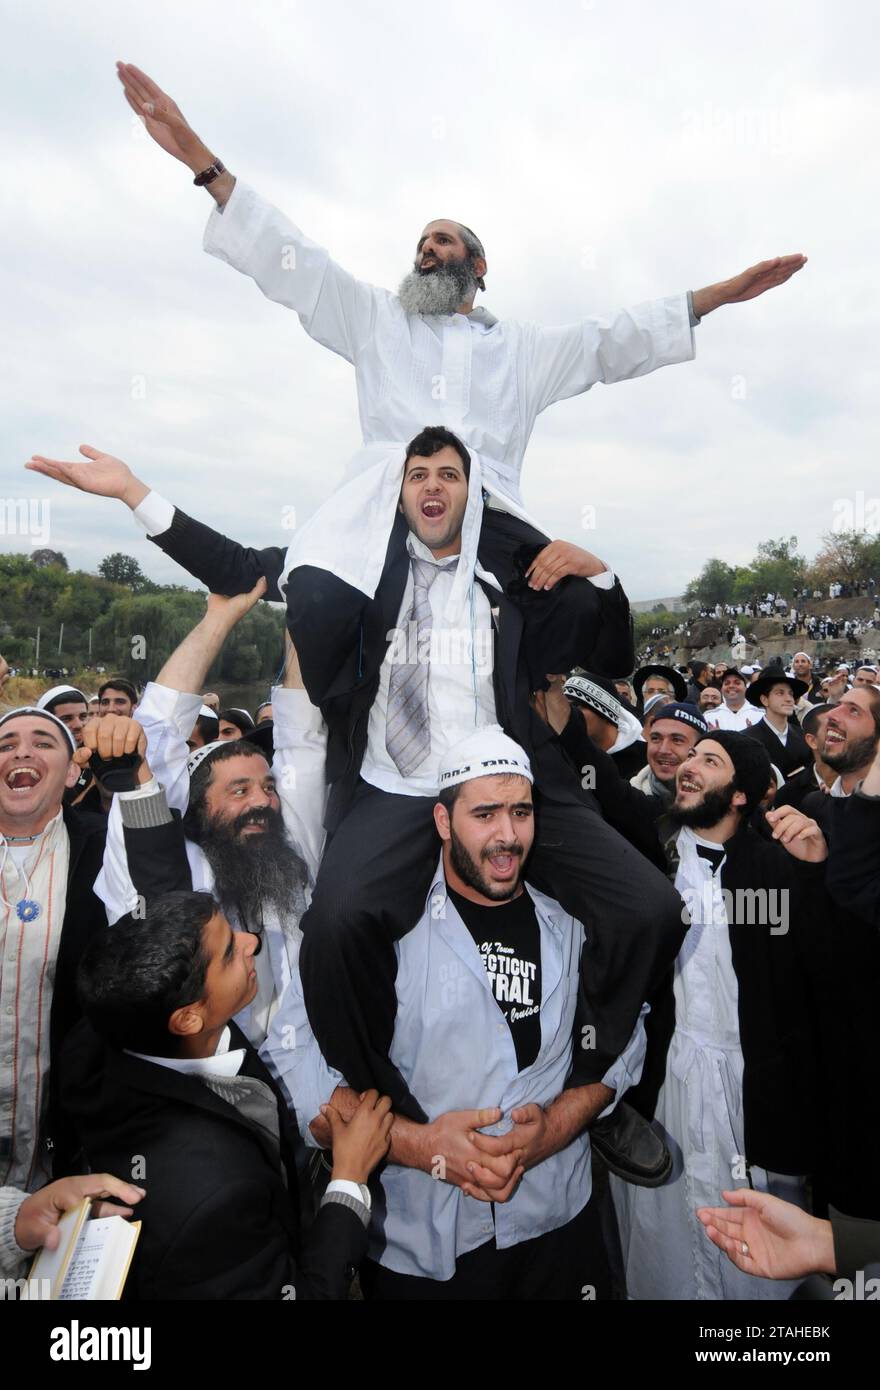 UMAN, UCRAINA - 20 SETTEMBRE 2009: Pellegrini ebrei ortodossi a Uman, Ucraina durante la celebrazione Rosh Hashanah, il capodanno ebraico a Uman, Ucraina. Foto Stock